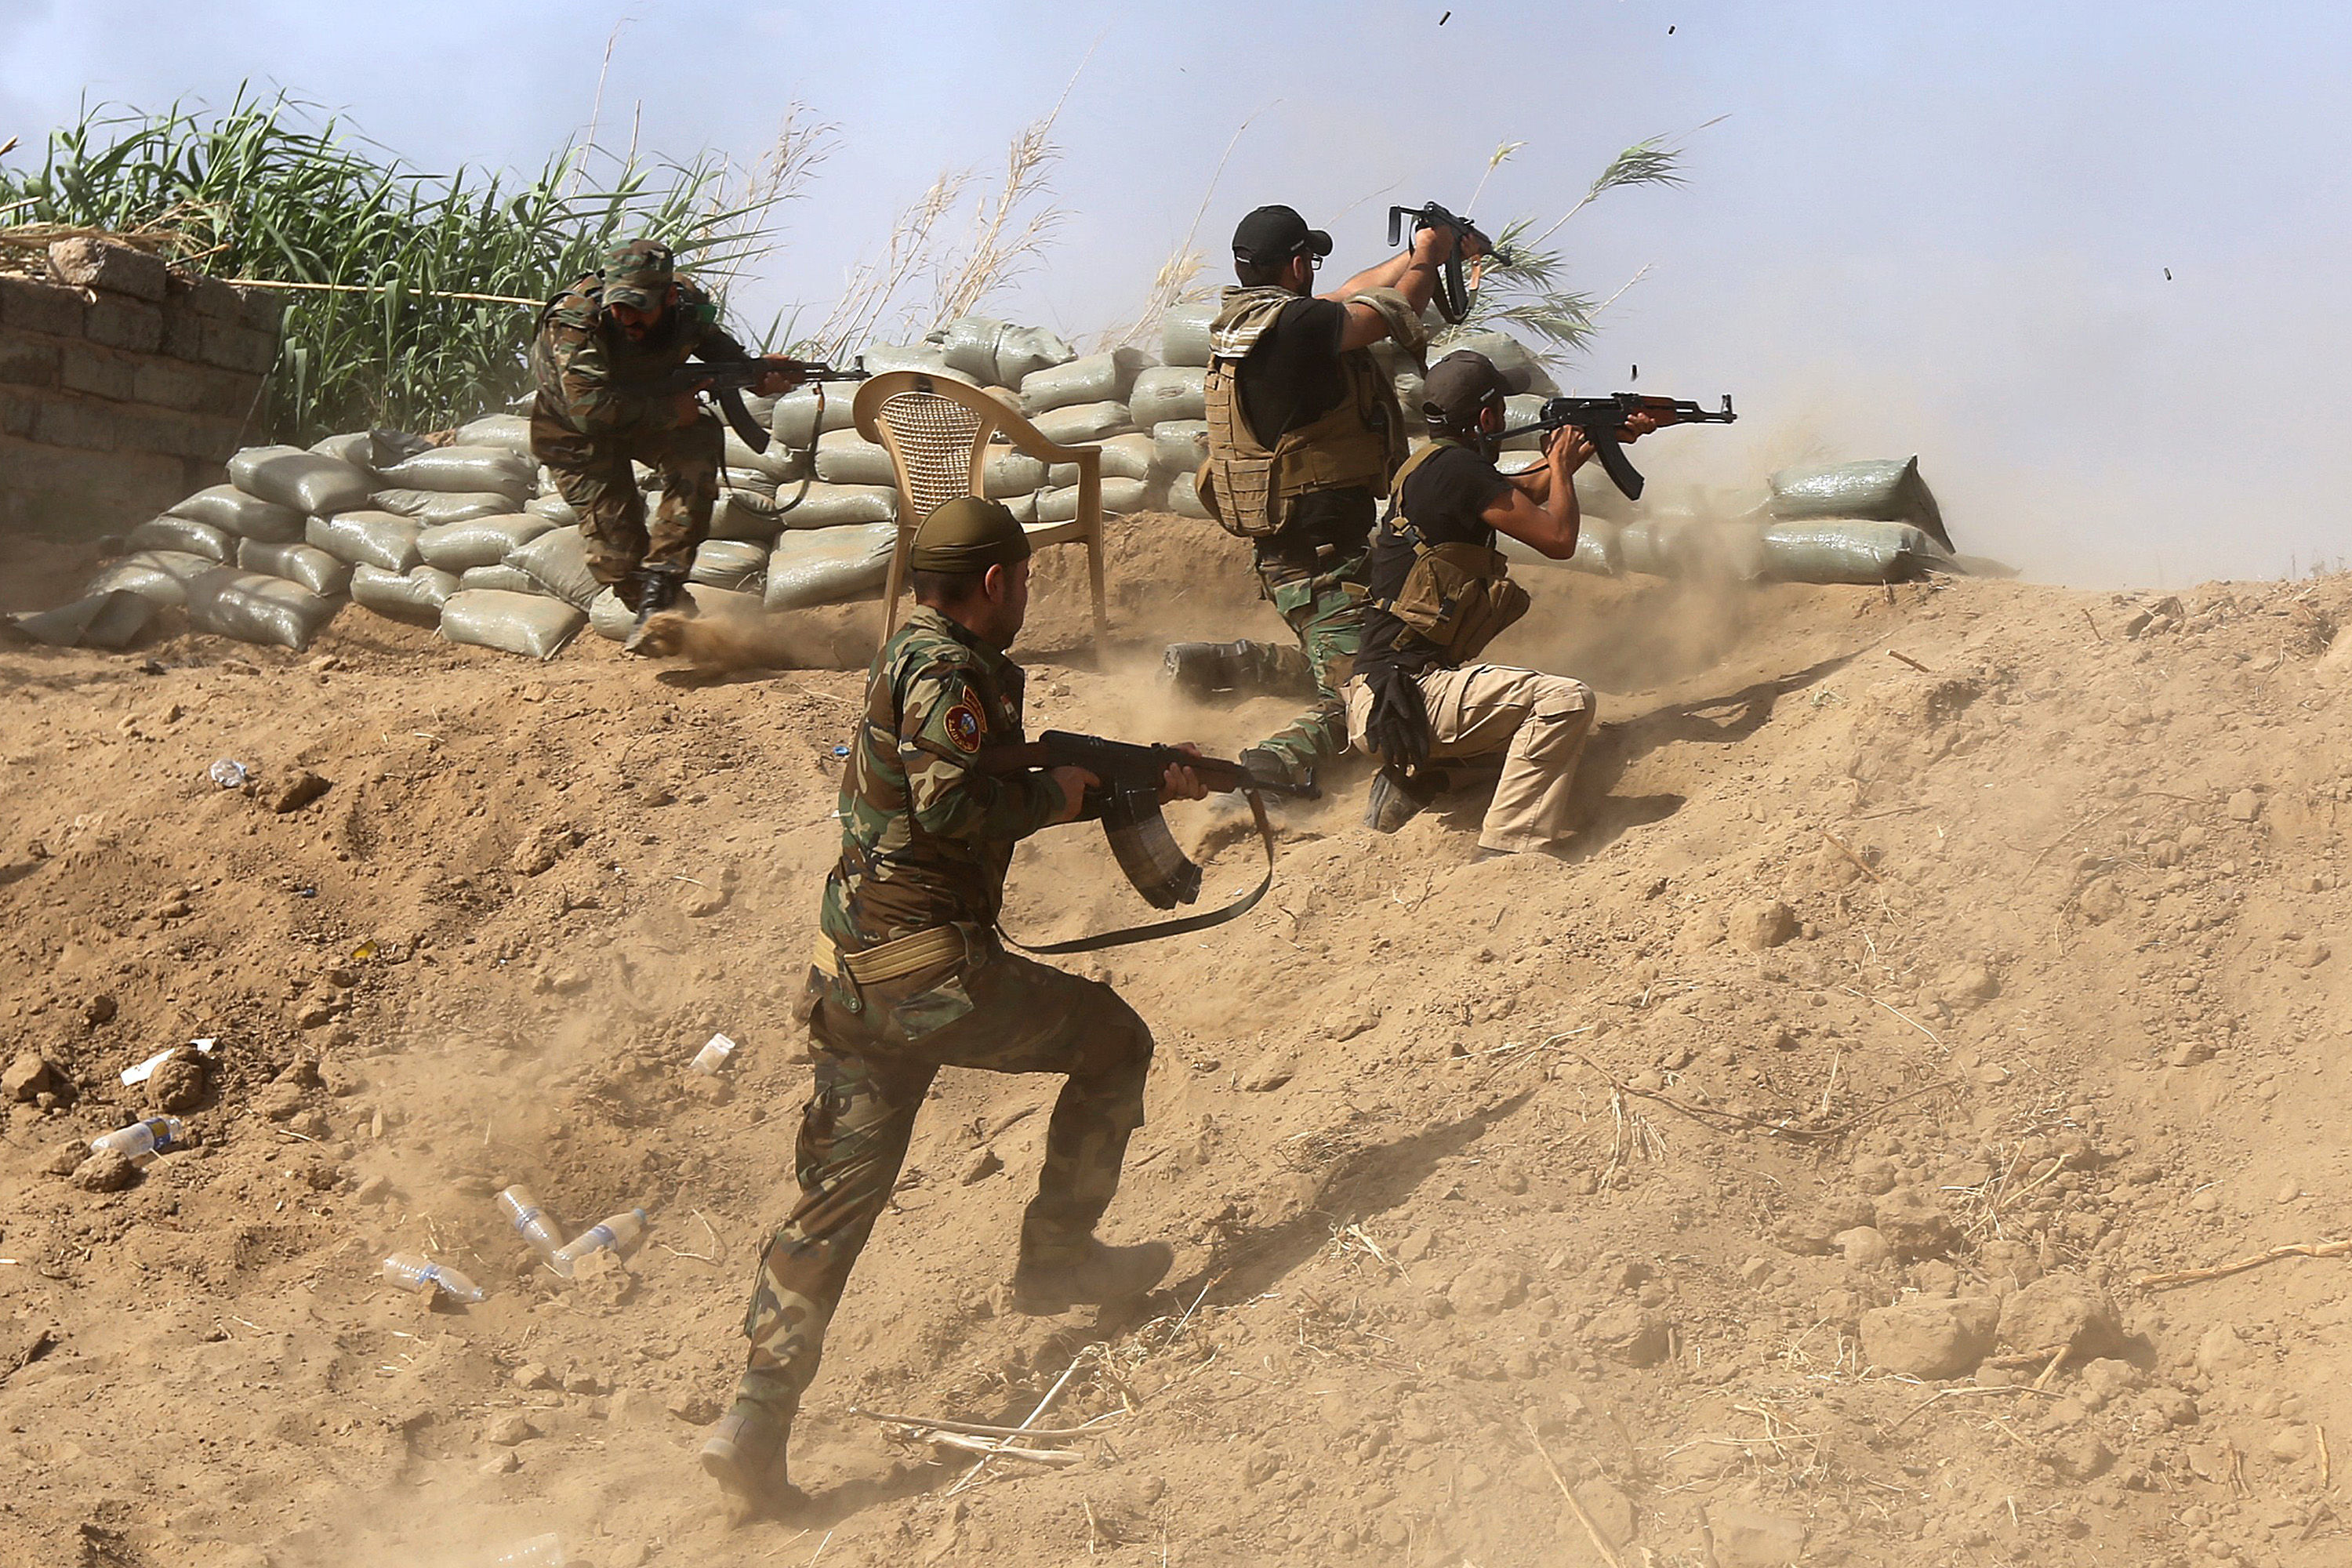 Iraqi Sunni fighters battling Islamic State jihadists fire their weapons on the outskirts of Iraq's Baiji oil refinery. Photographer: Ahmad Al-Rubaye/AFP via Getty Images
